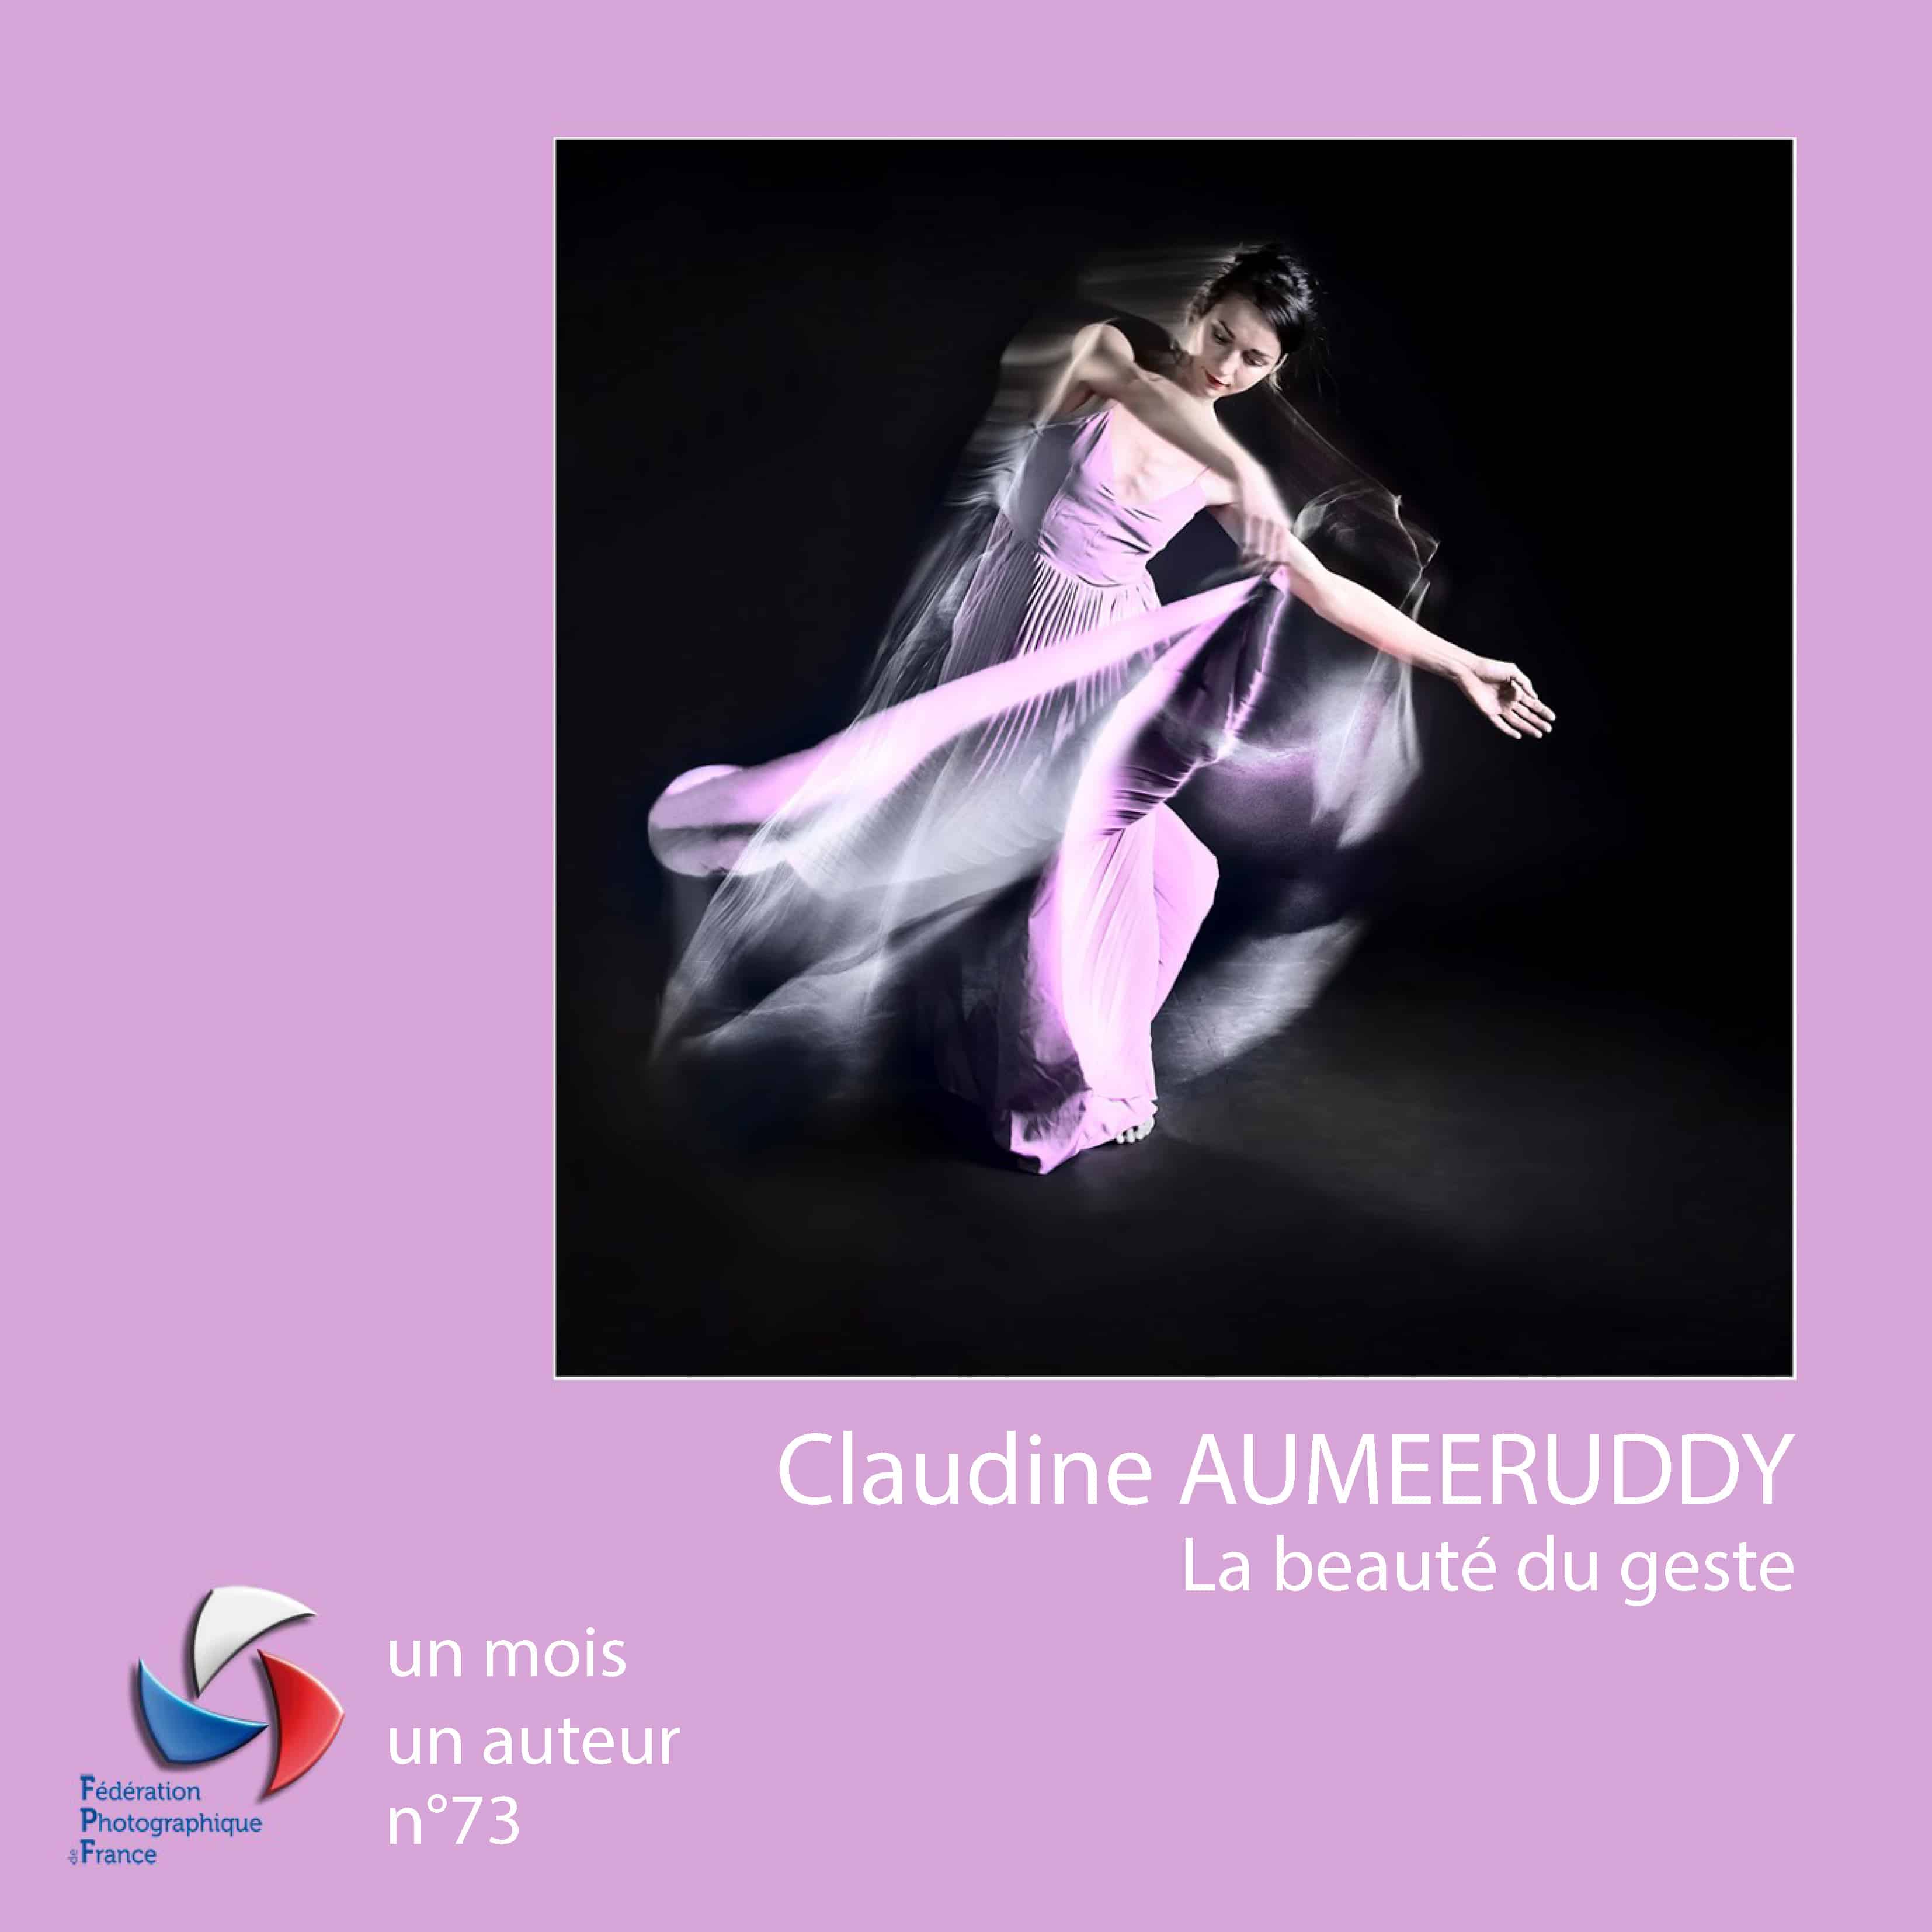 Claudine Aumeeruddy